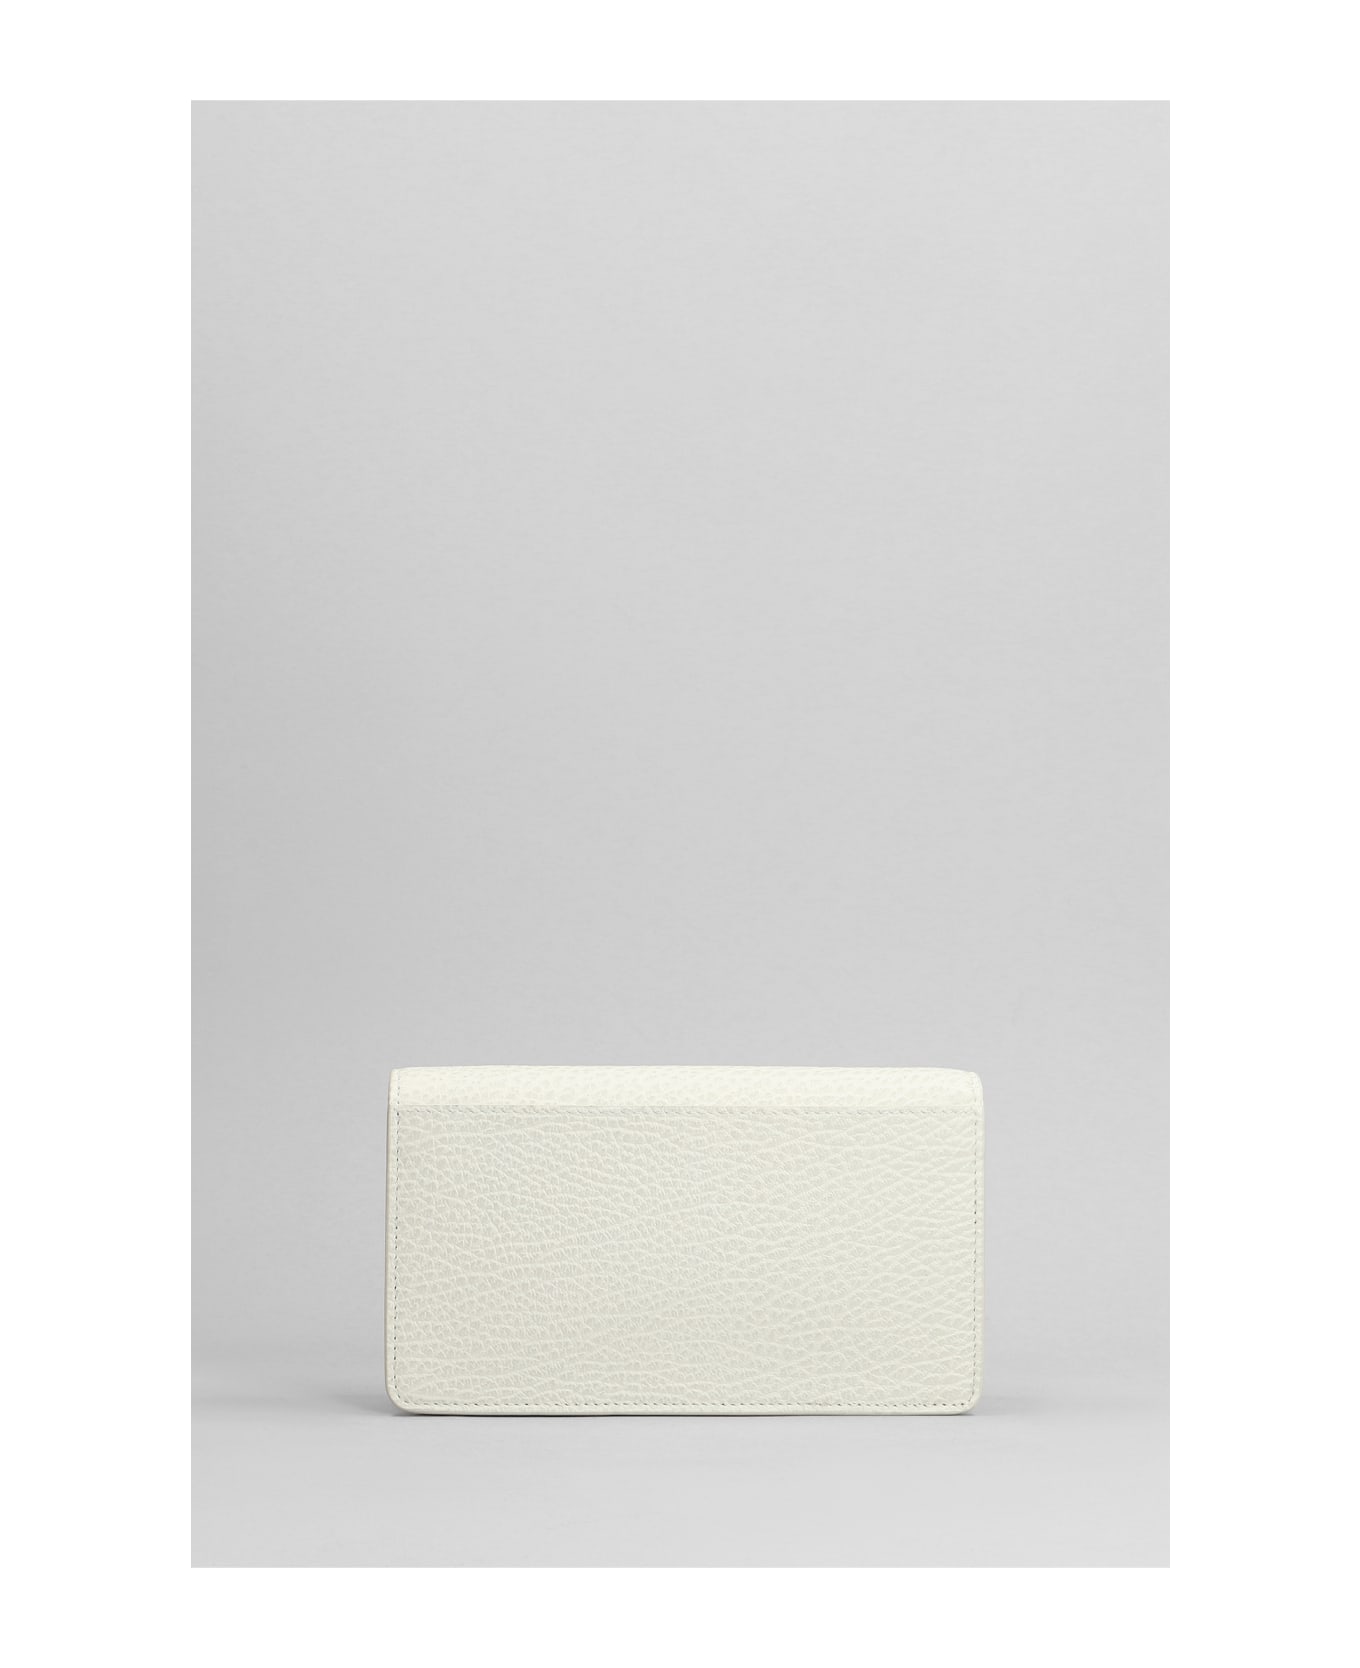 Maison Margiela Large Wallet With Chain - WHITE 財布